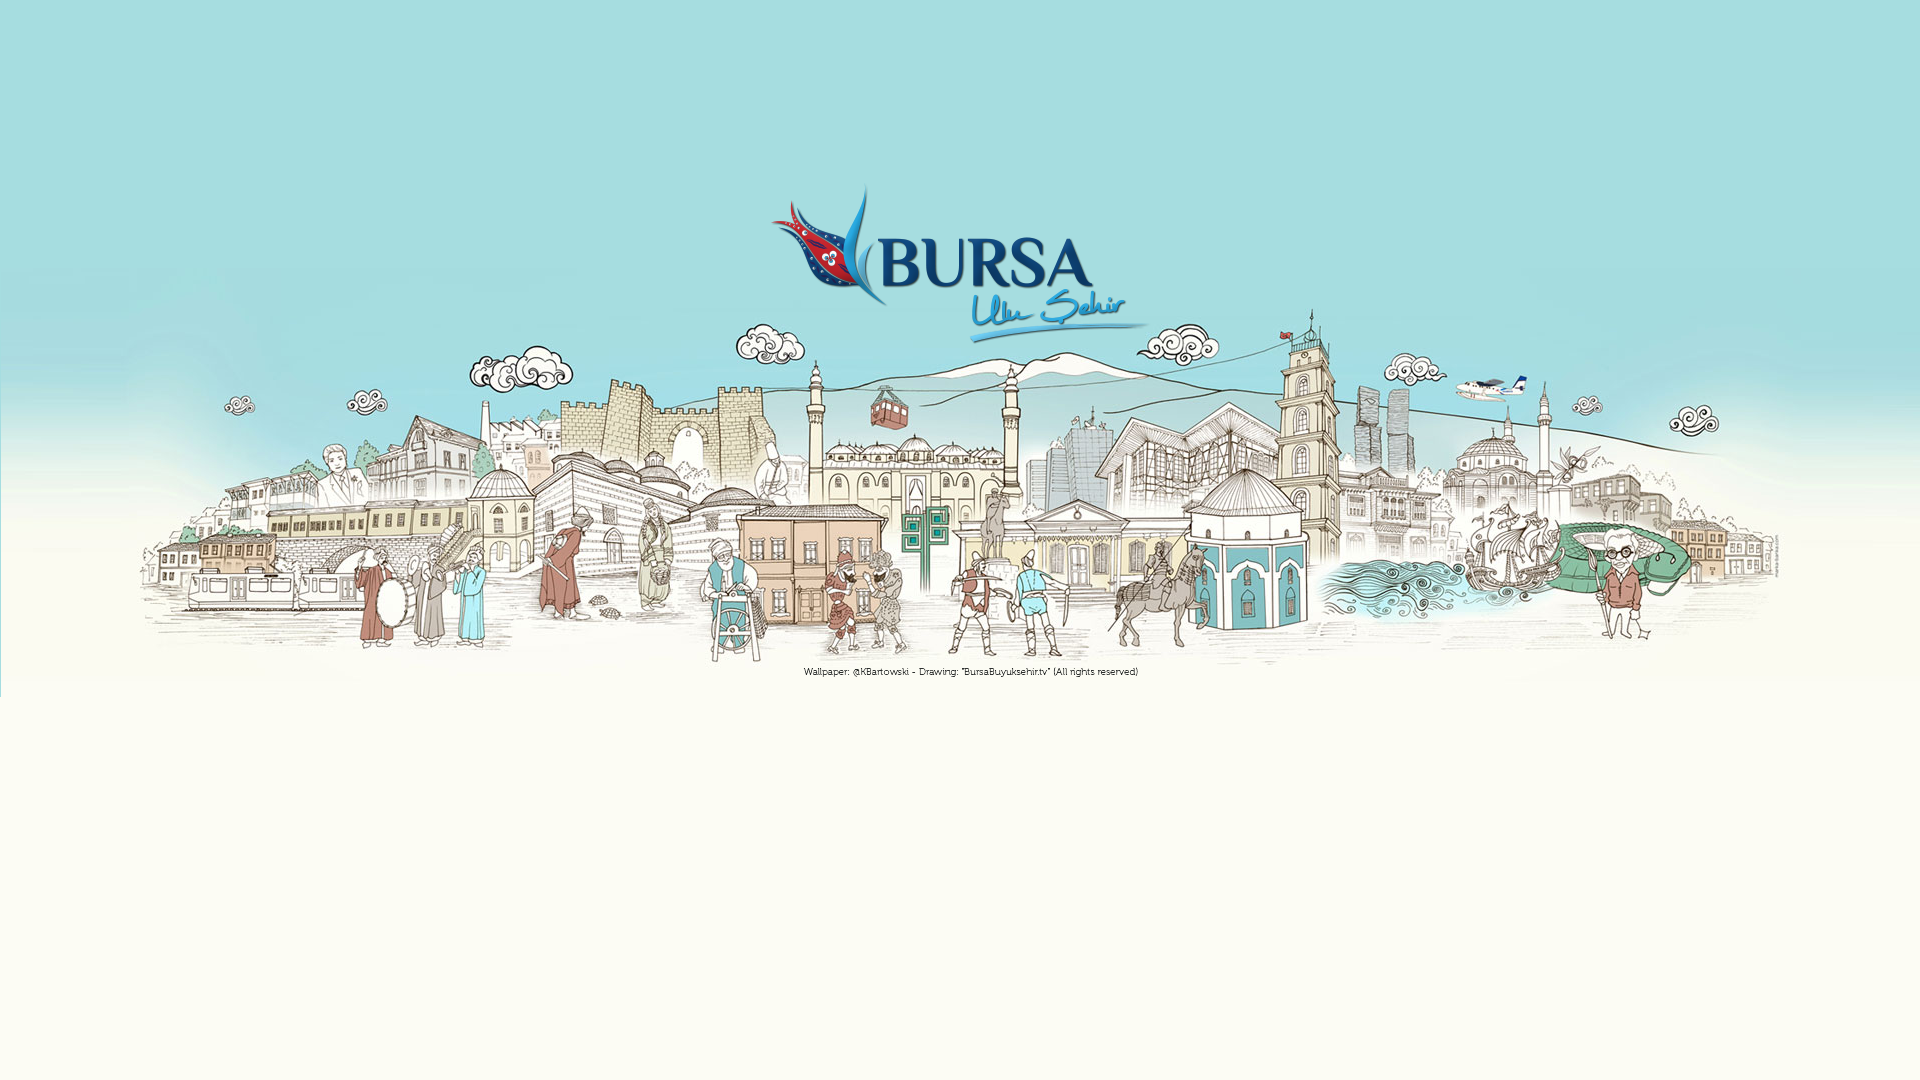 Resort town of Bursa, Turkey wallpaper and image, picture, photo